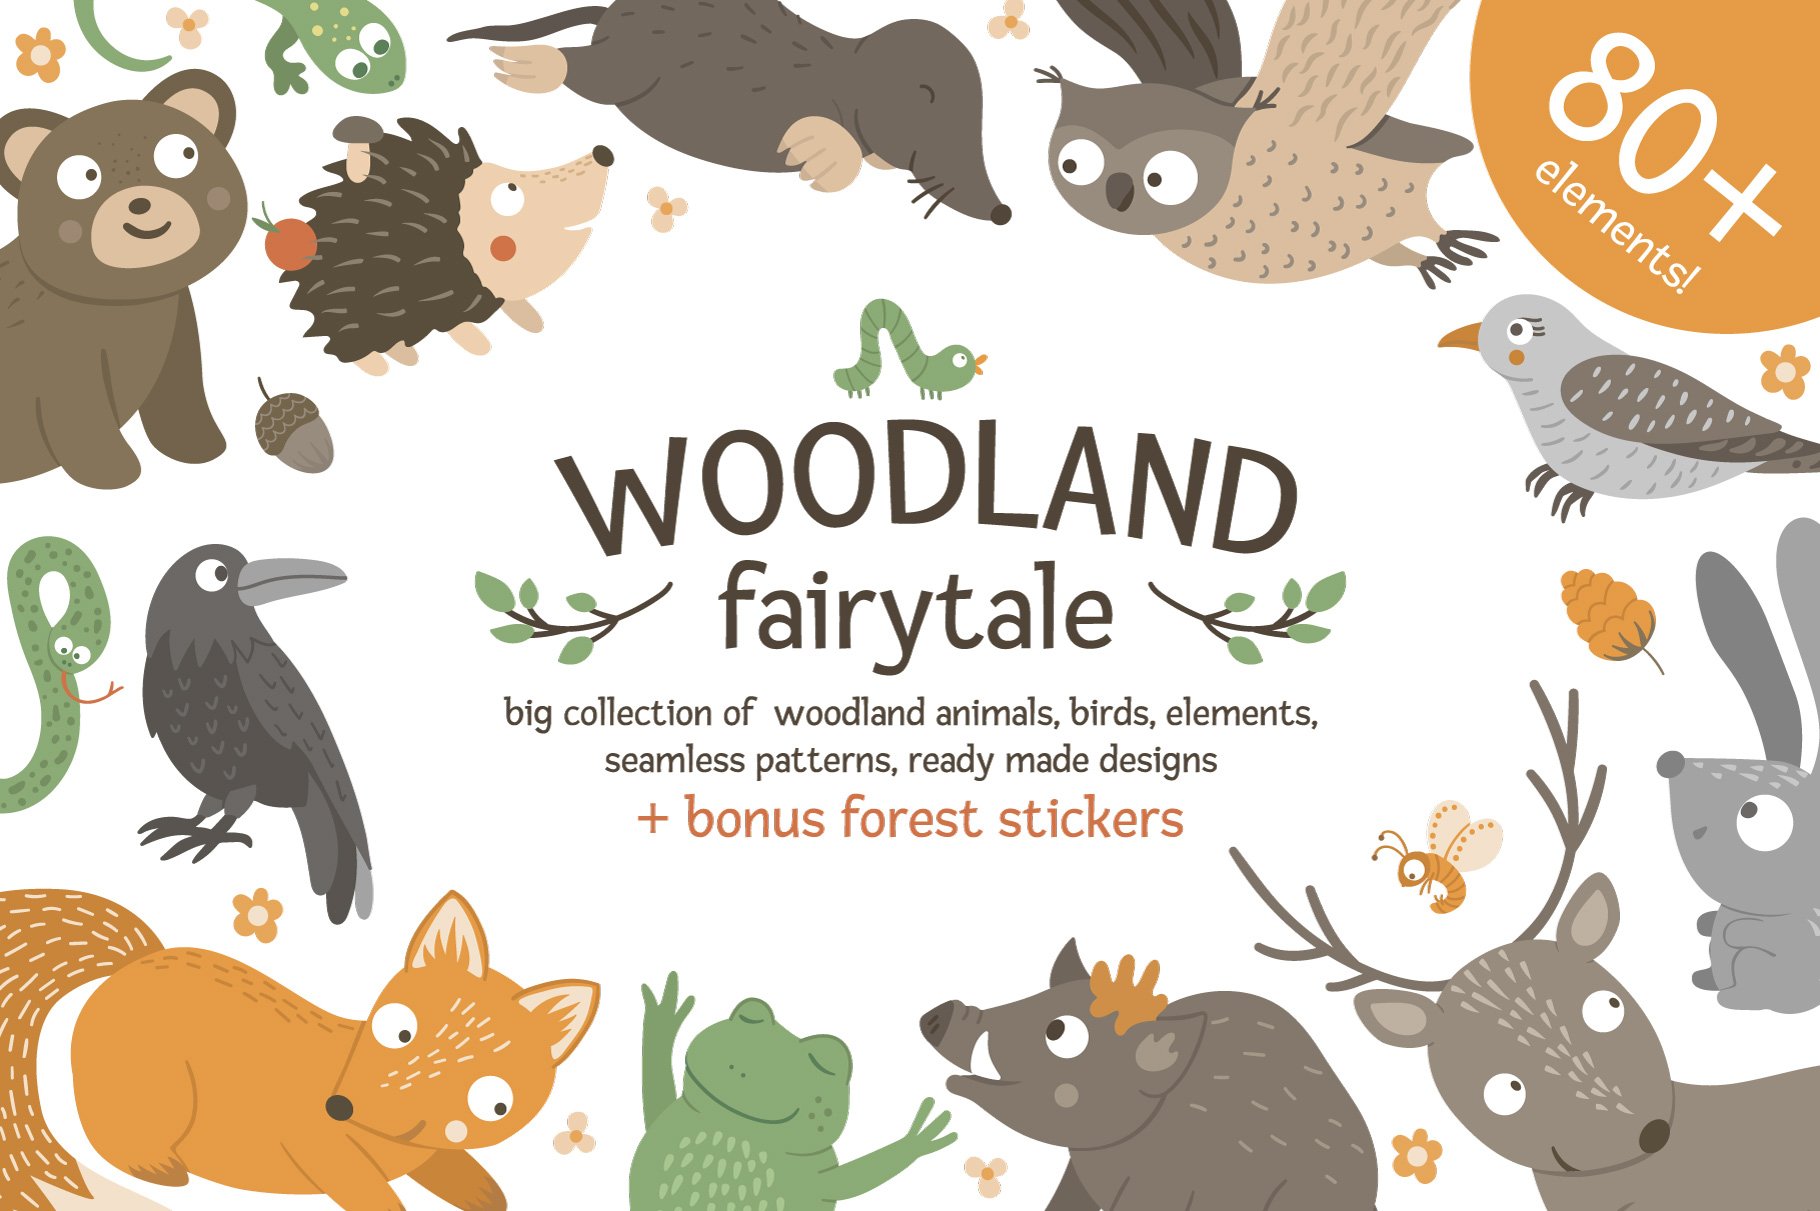 Woodland Fairytale cover image.